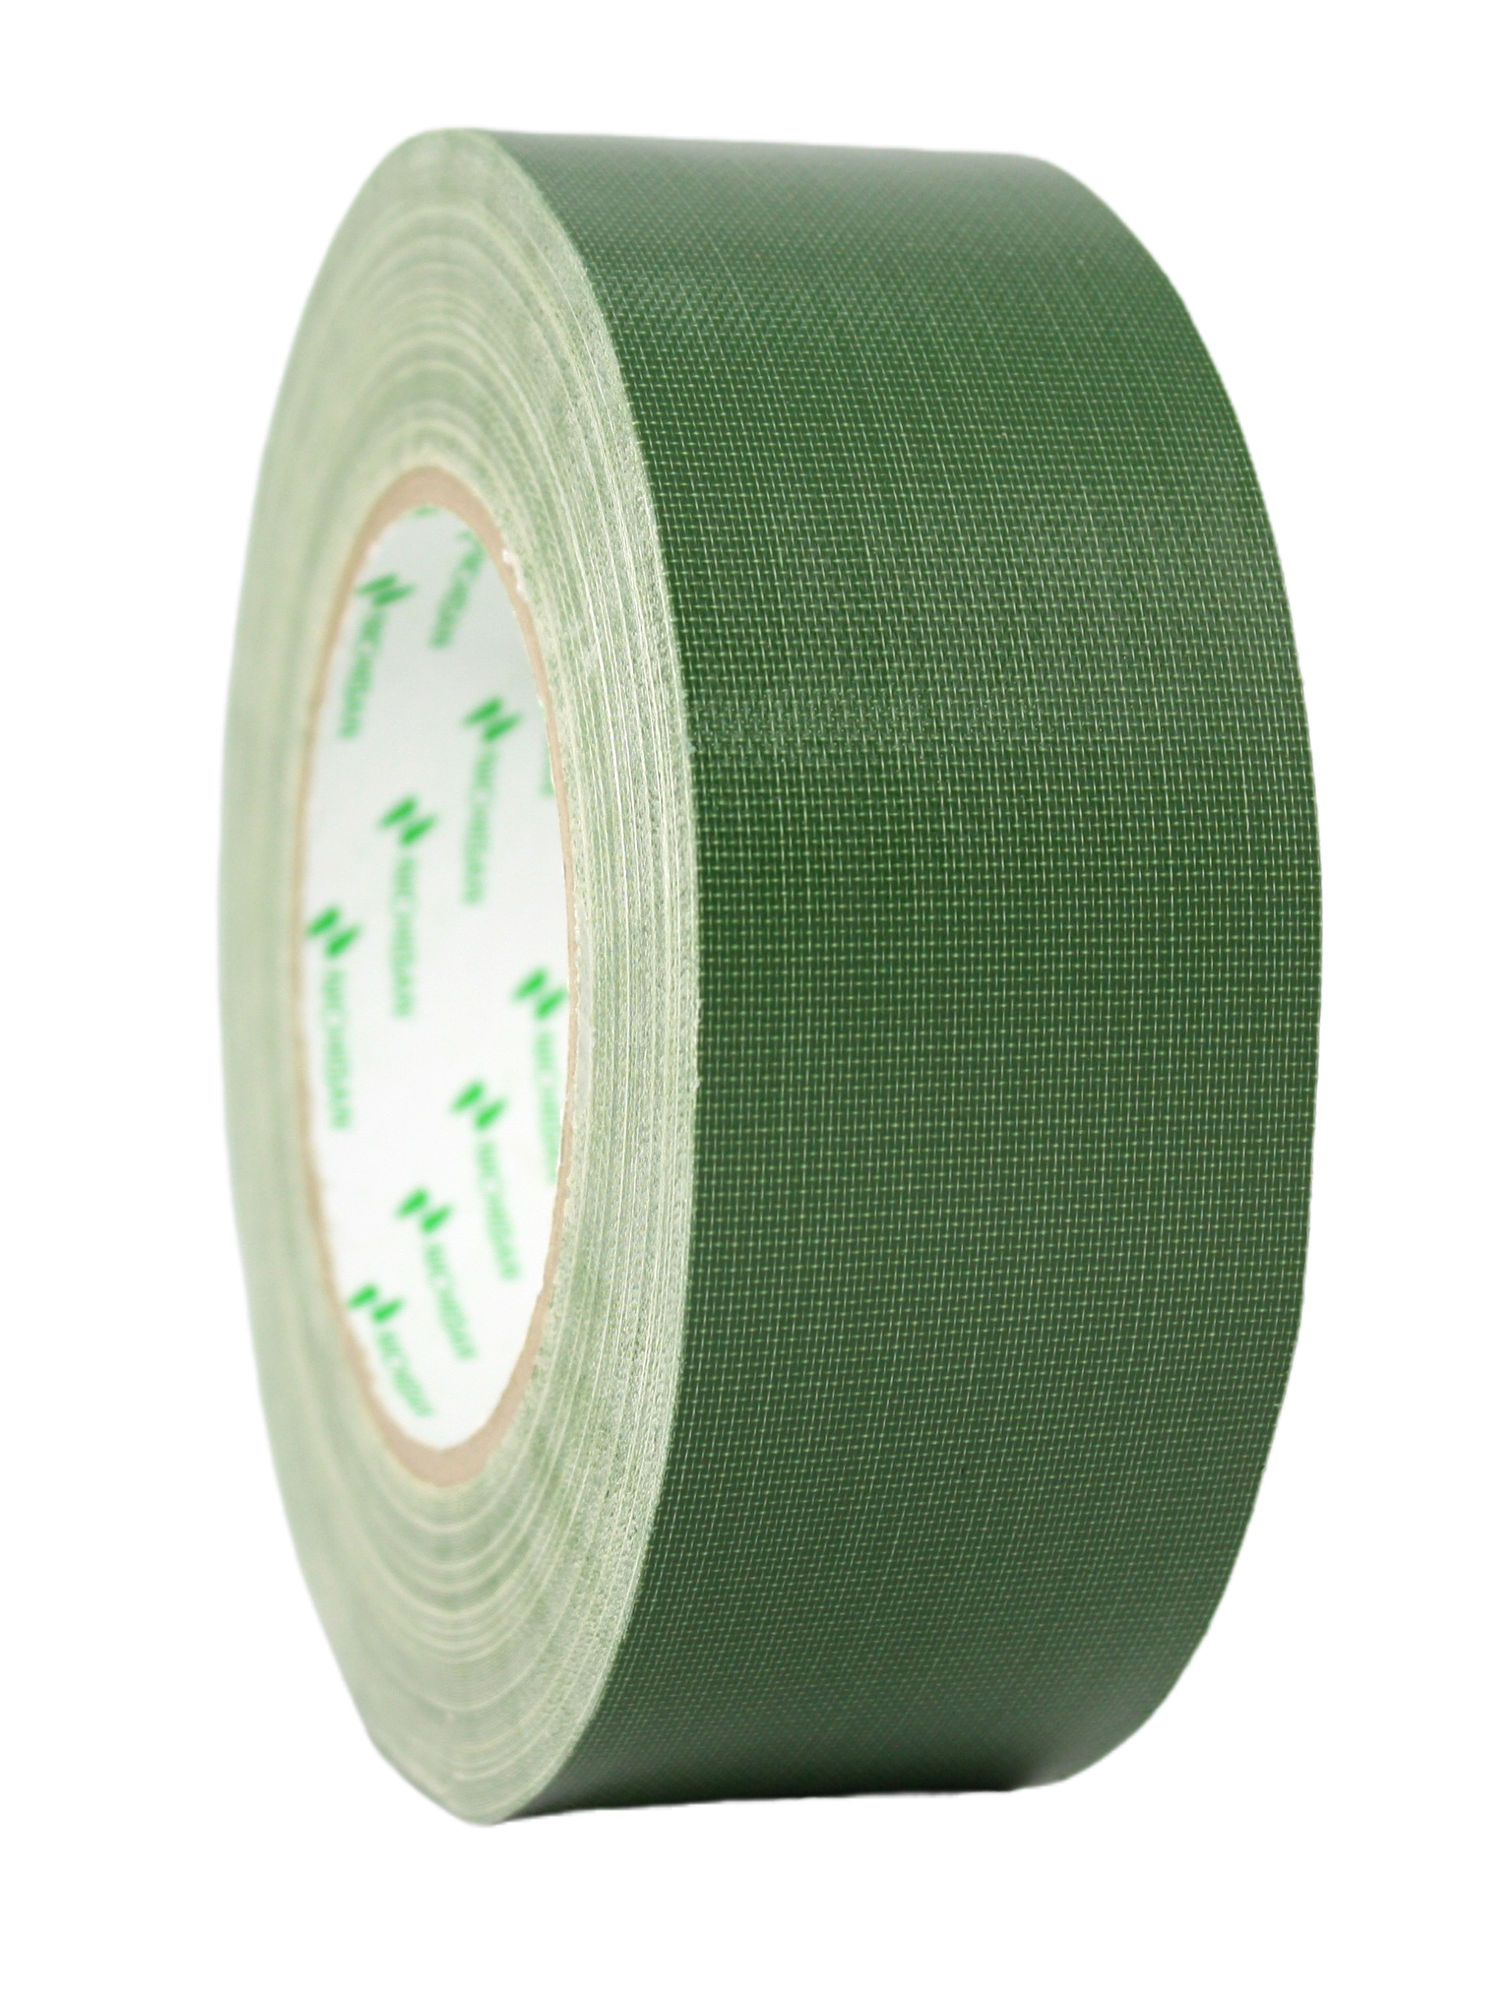 Nichiban Green Gaff Tape, 2" roll, side view